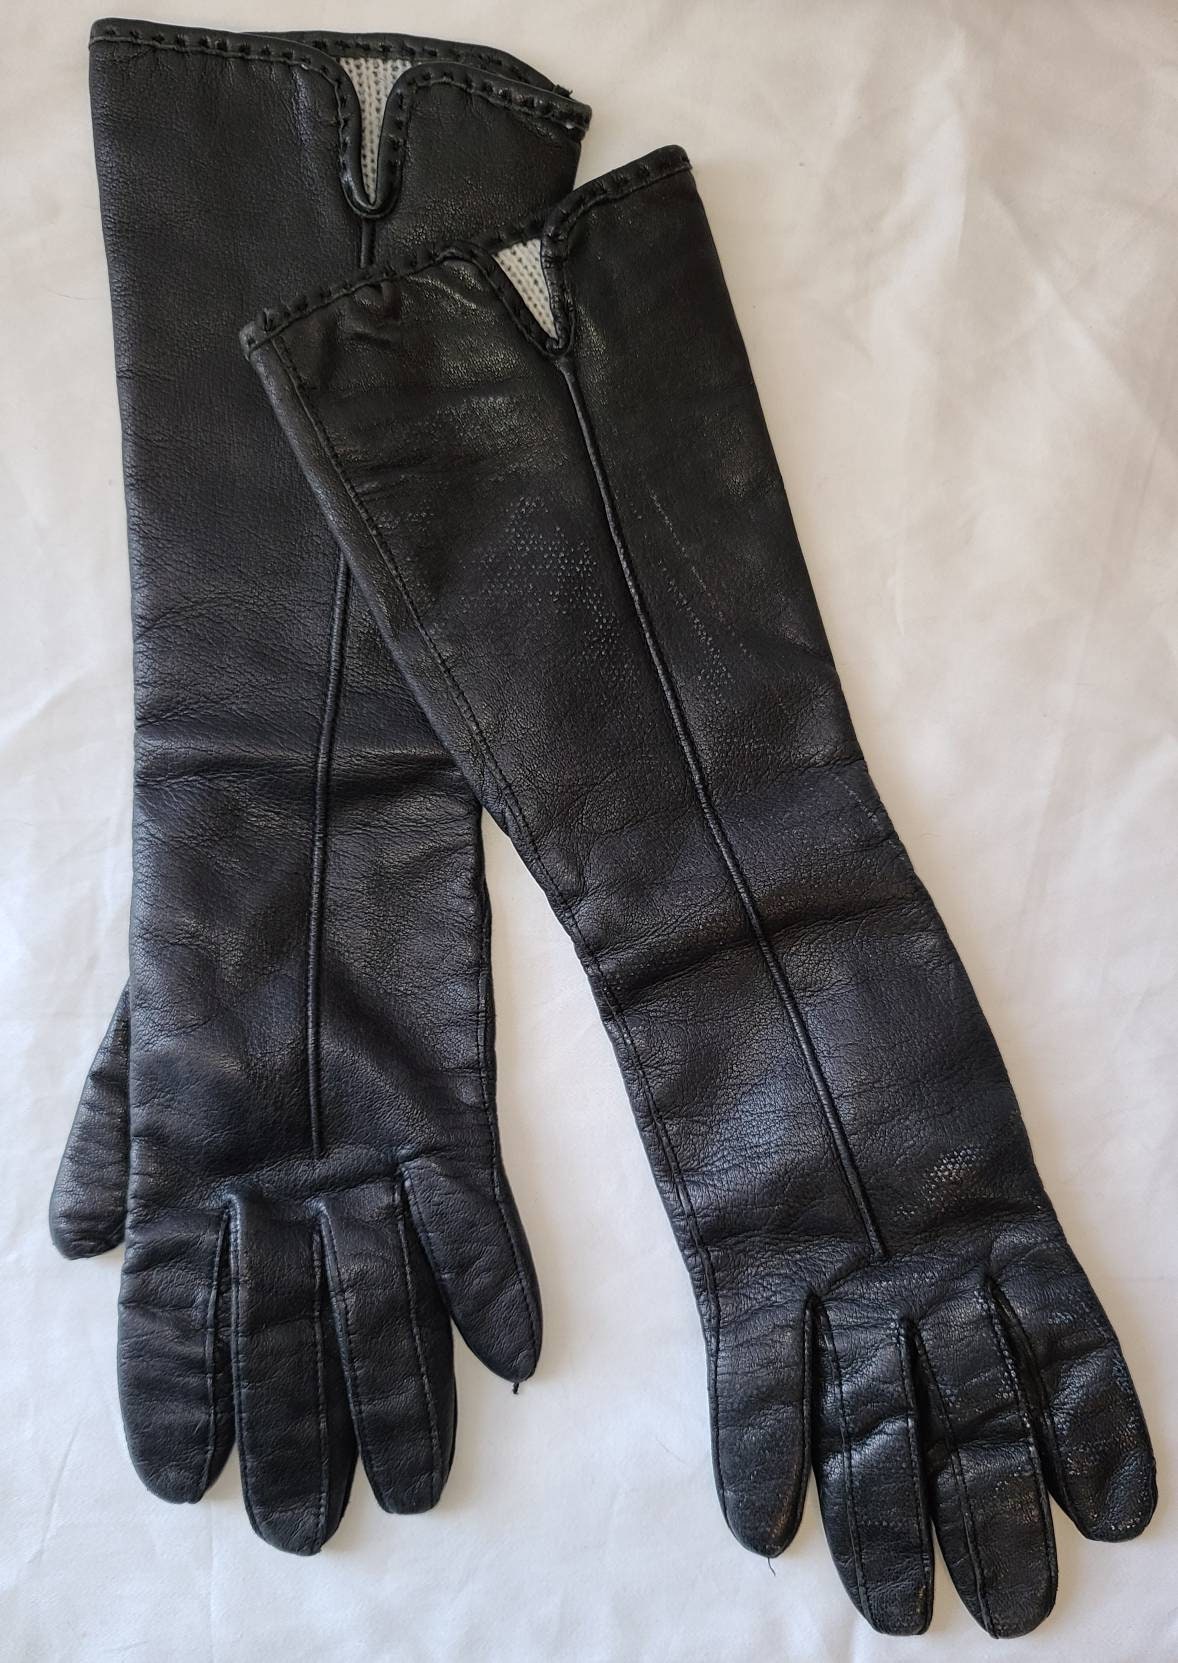 SALE Vintage Leather Gloves 1980s 90s Midlength Black Leather Gloves Knit Lining Boho 6 1/2